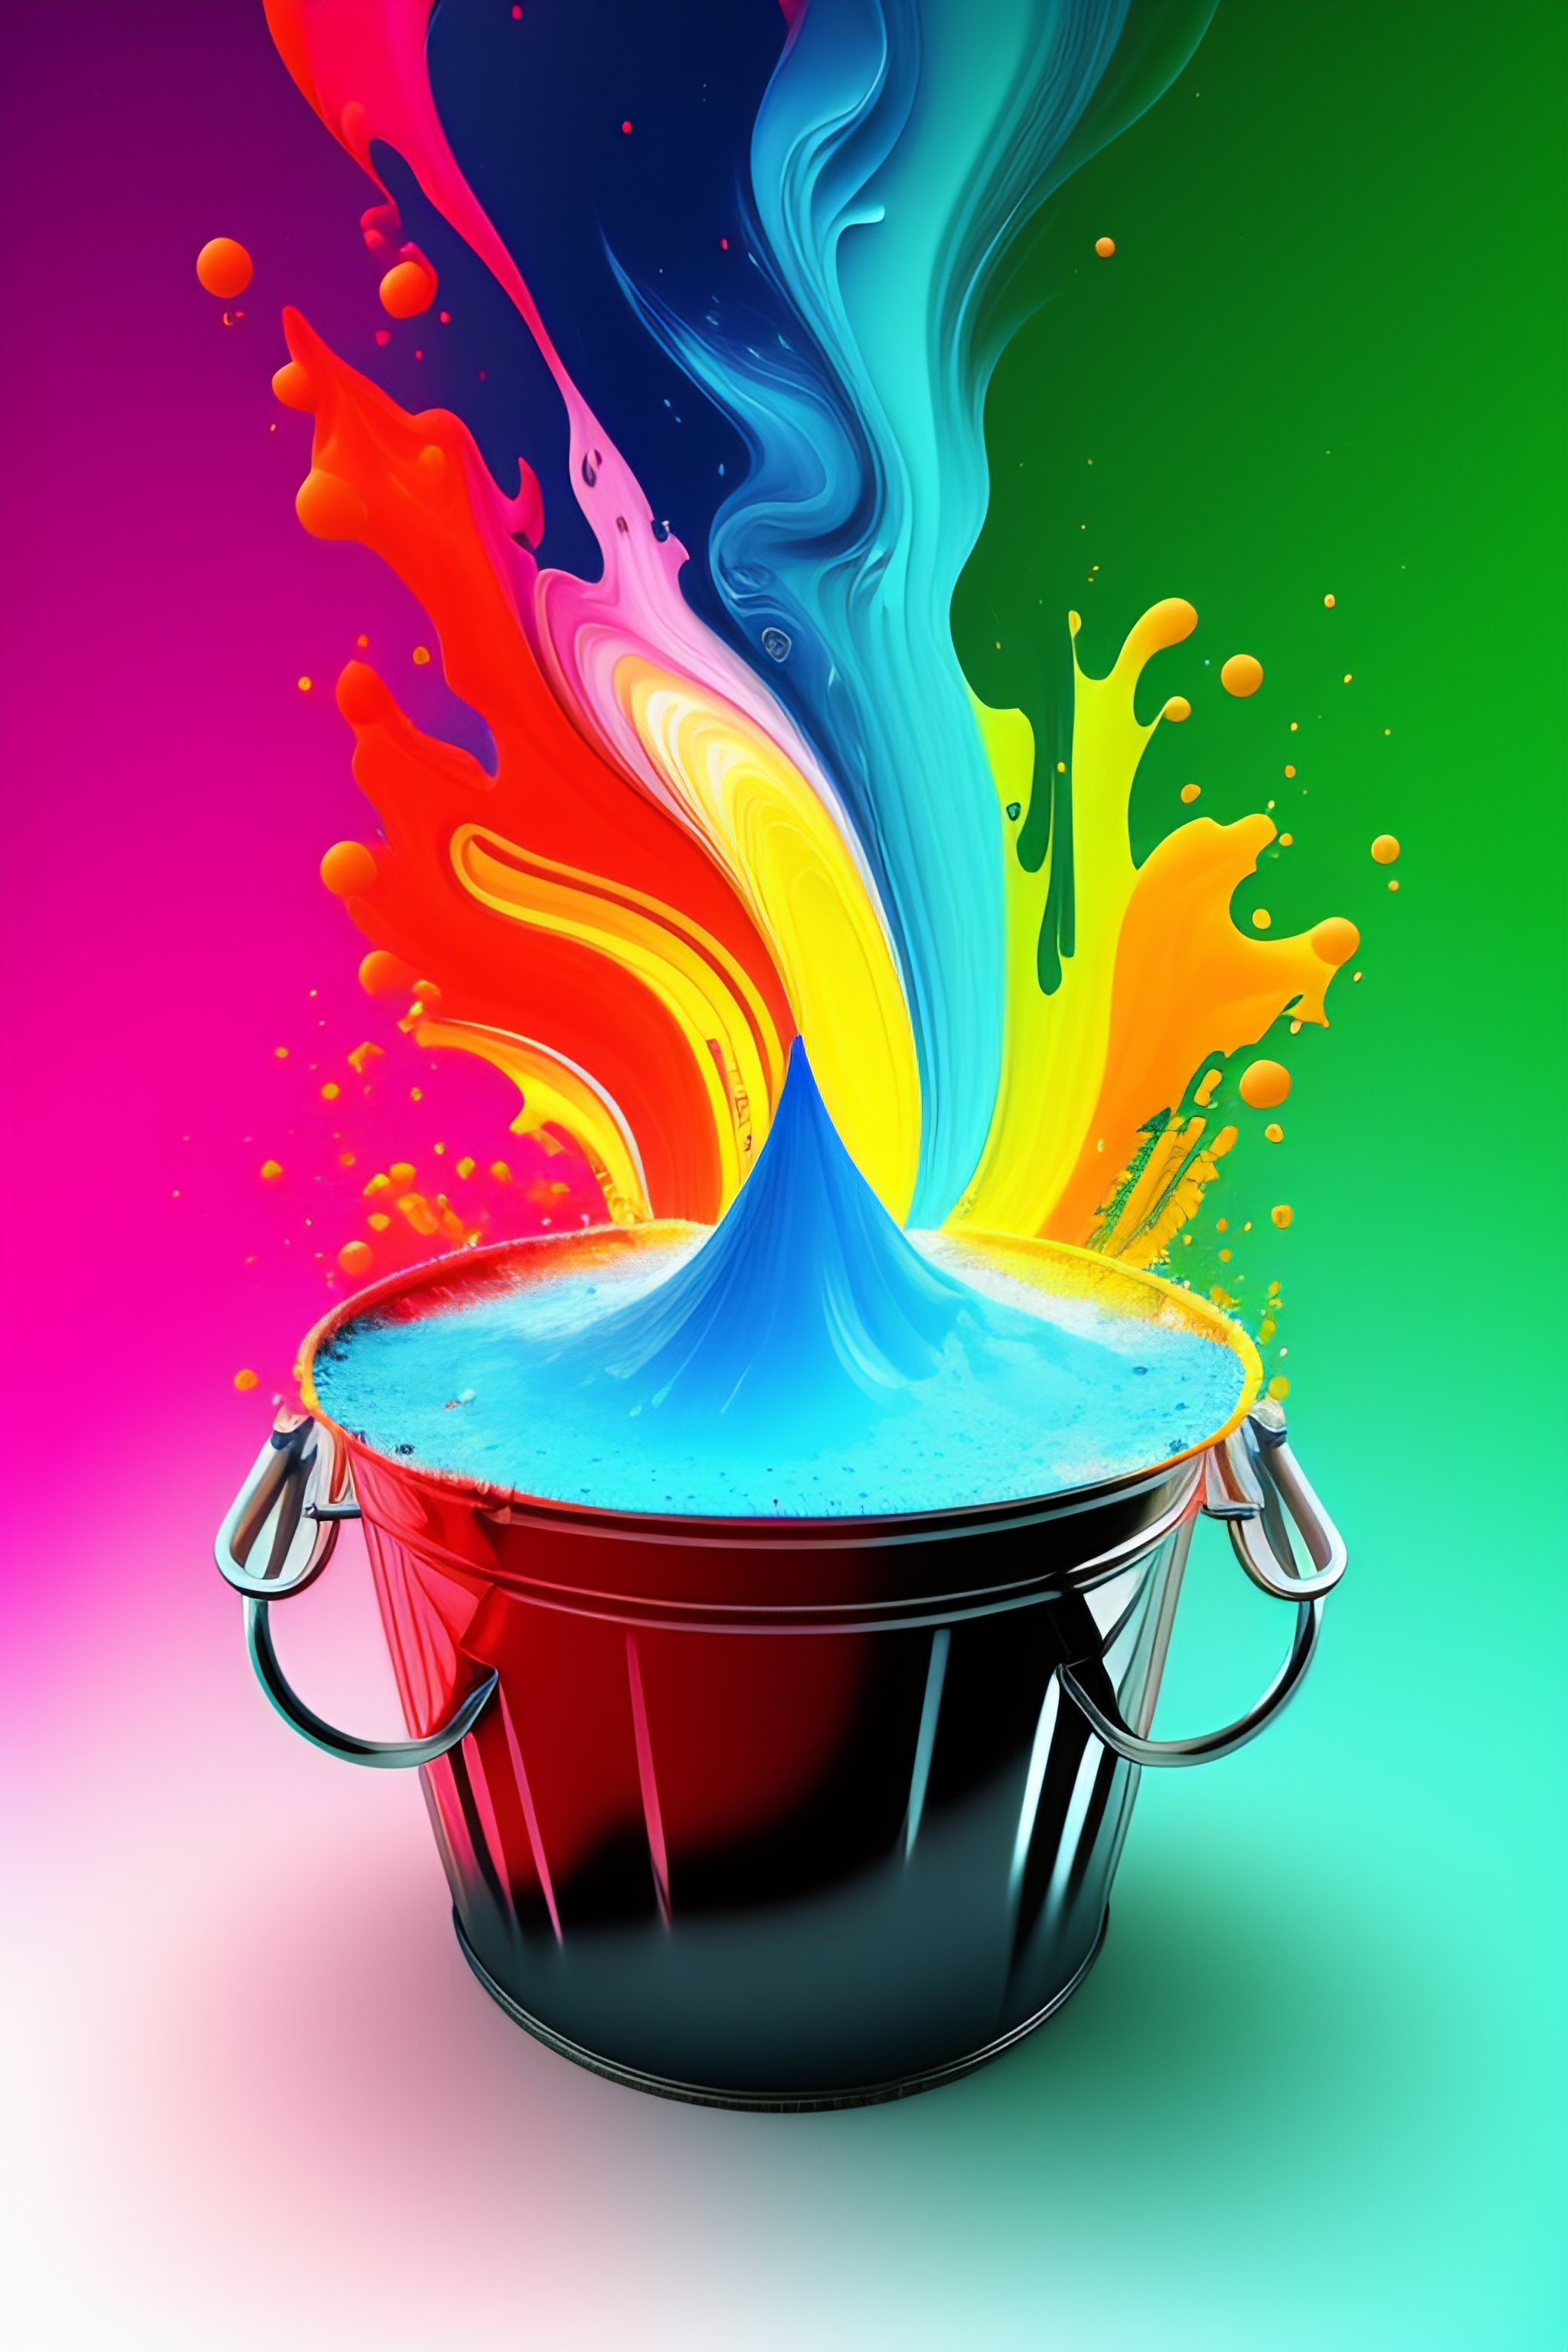 Paint Bucket Pouring Images – Browse 39,969 Stock Photos, Vectors